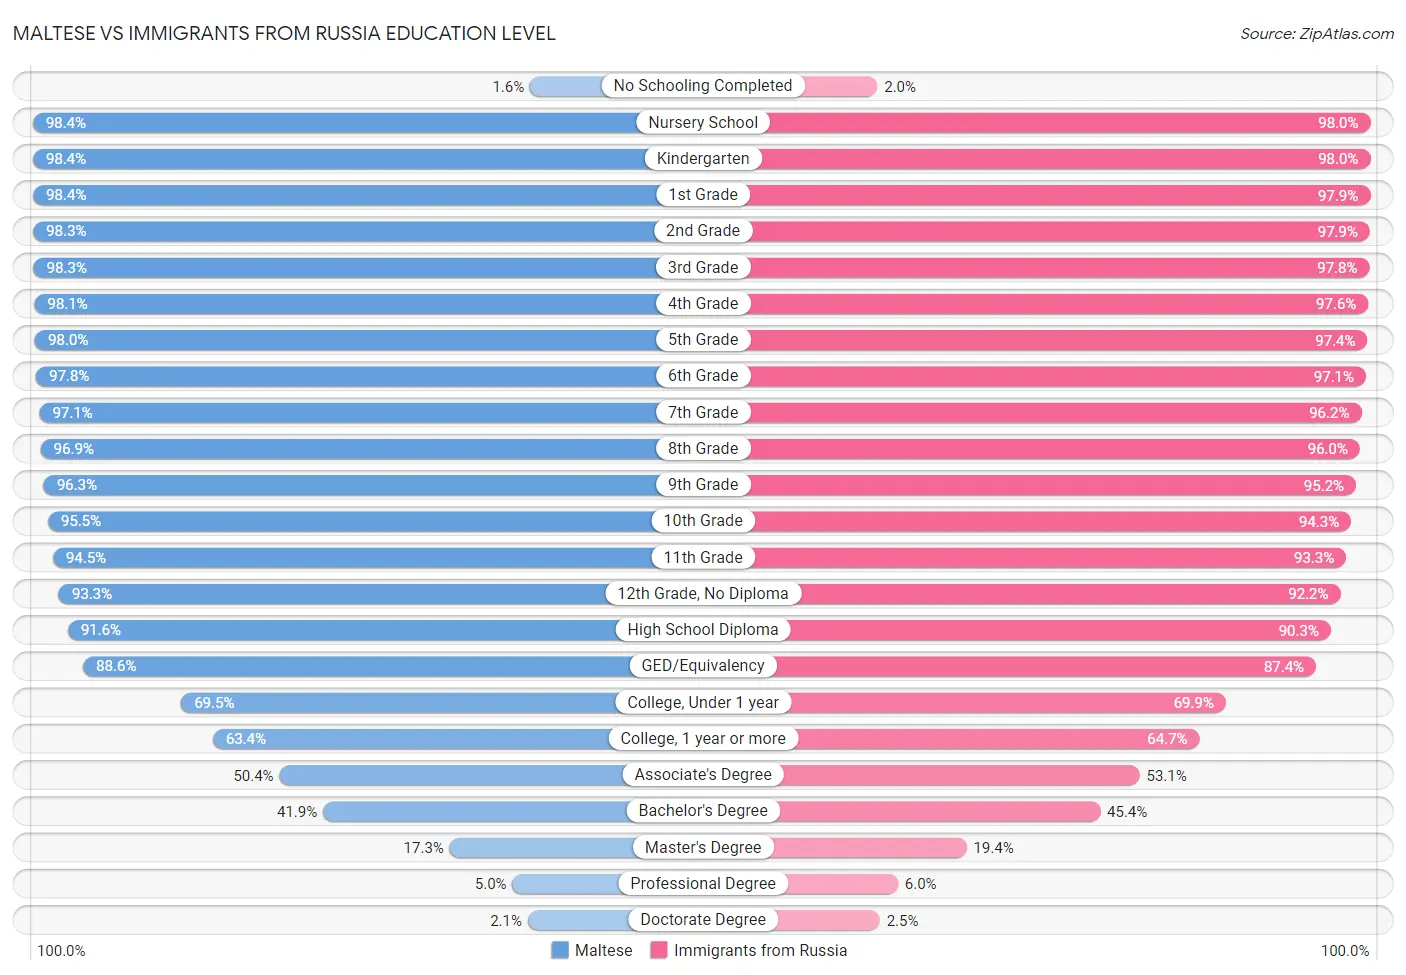 Maltese vs Immigrants from Russia Education Level